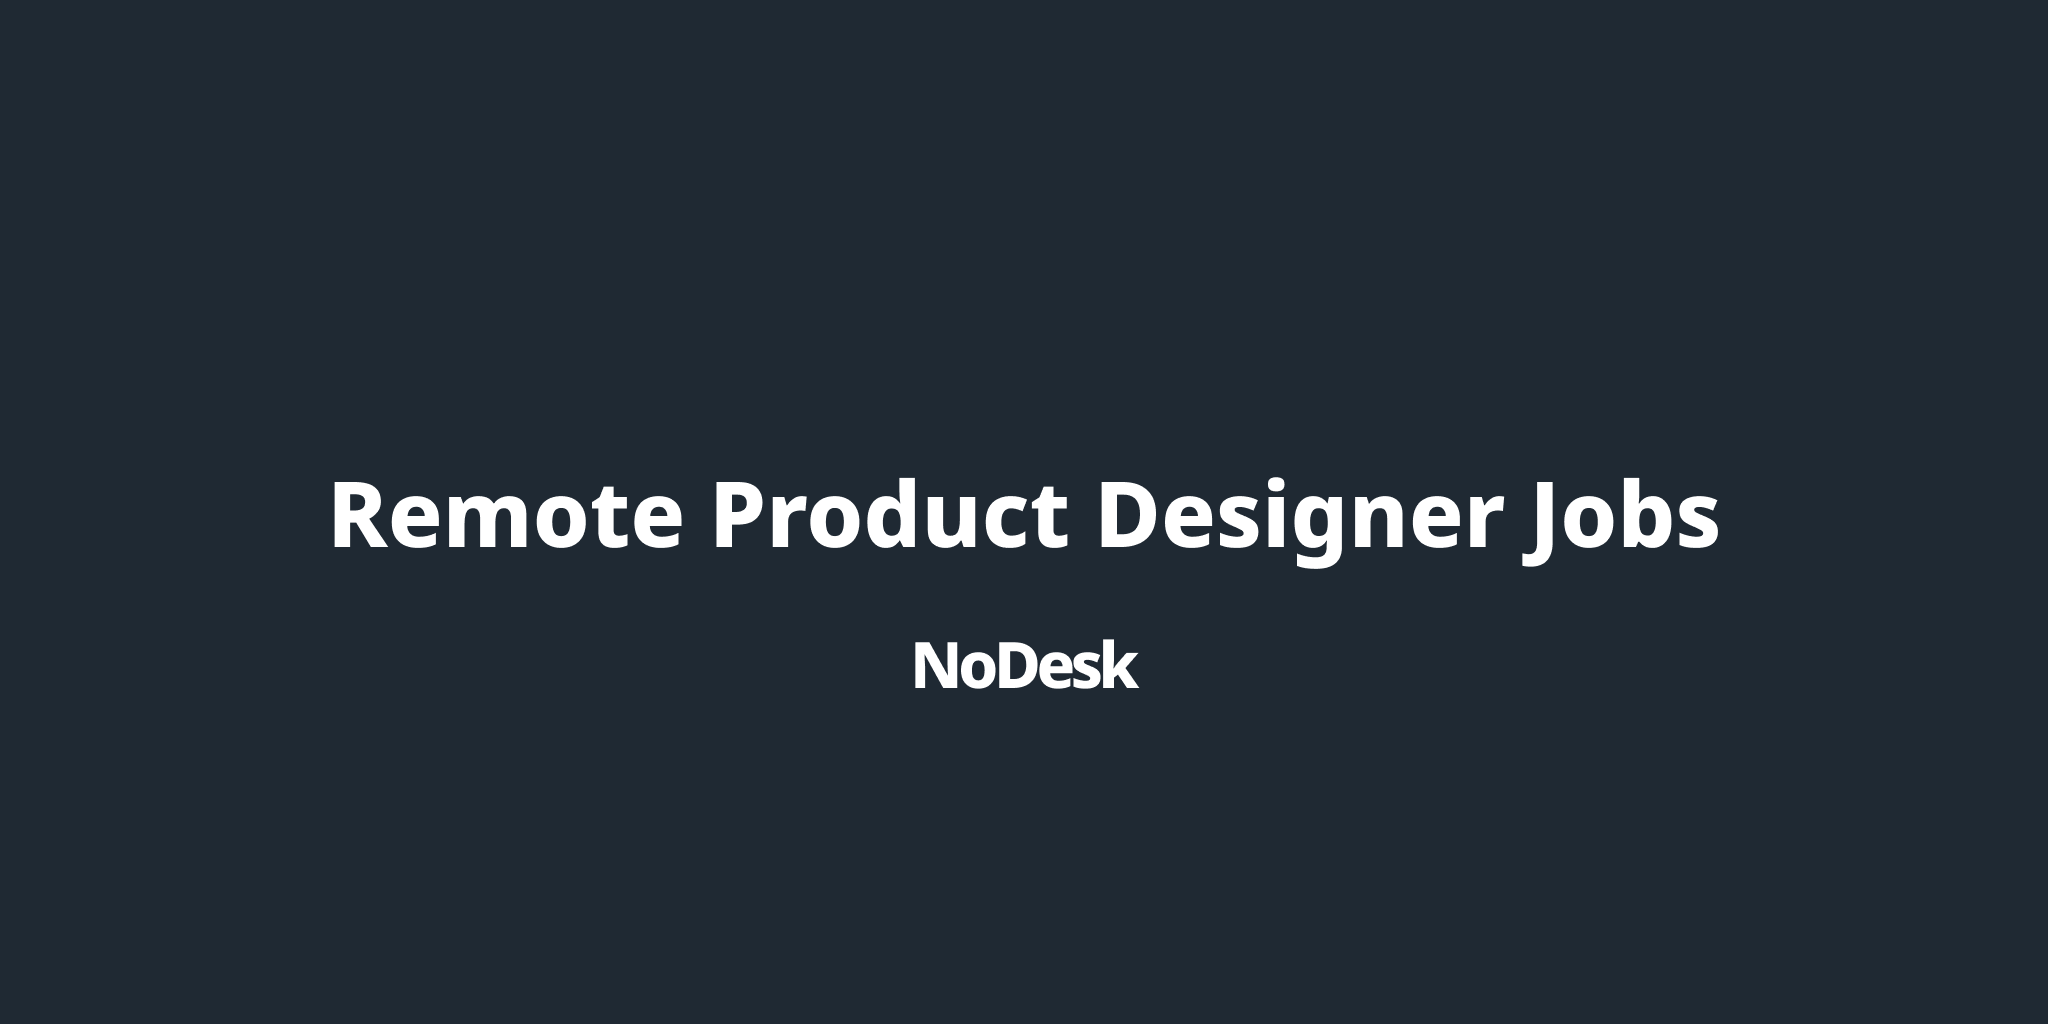 Remote Product Designer Jobs - NoDesk